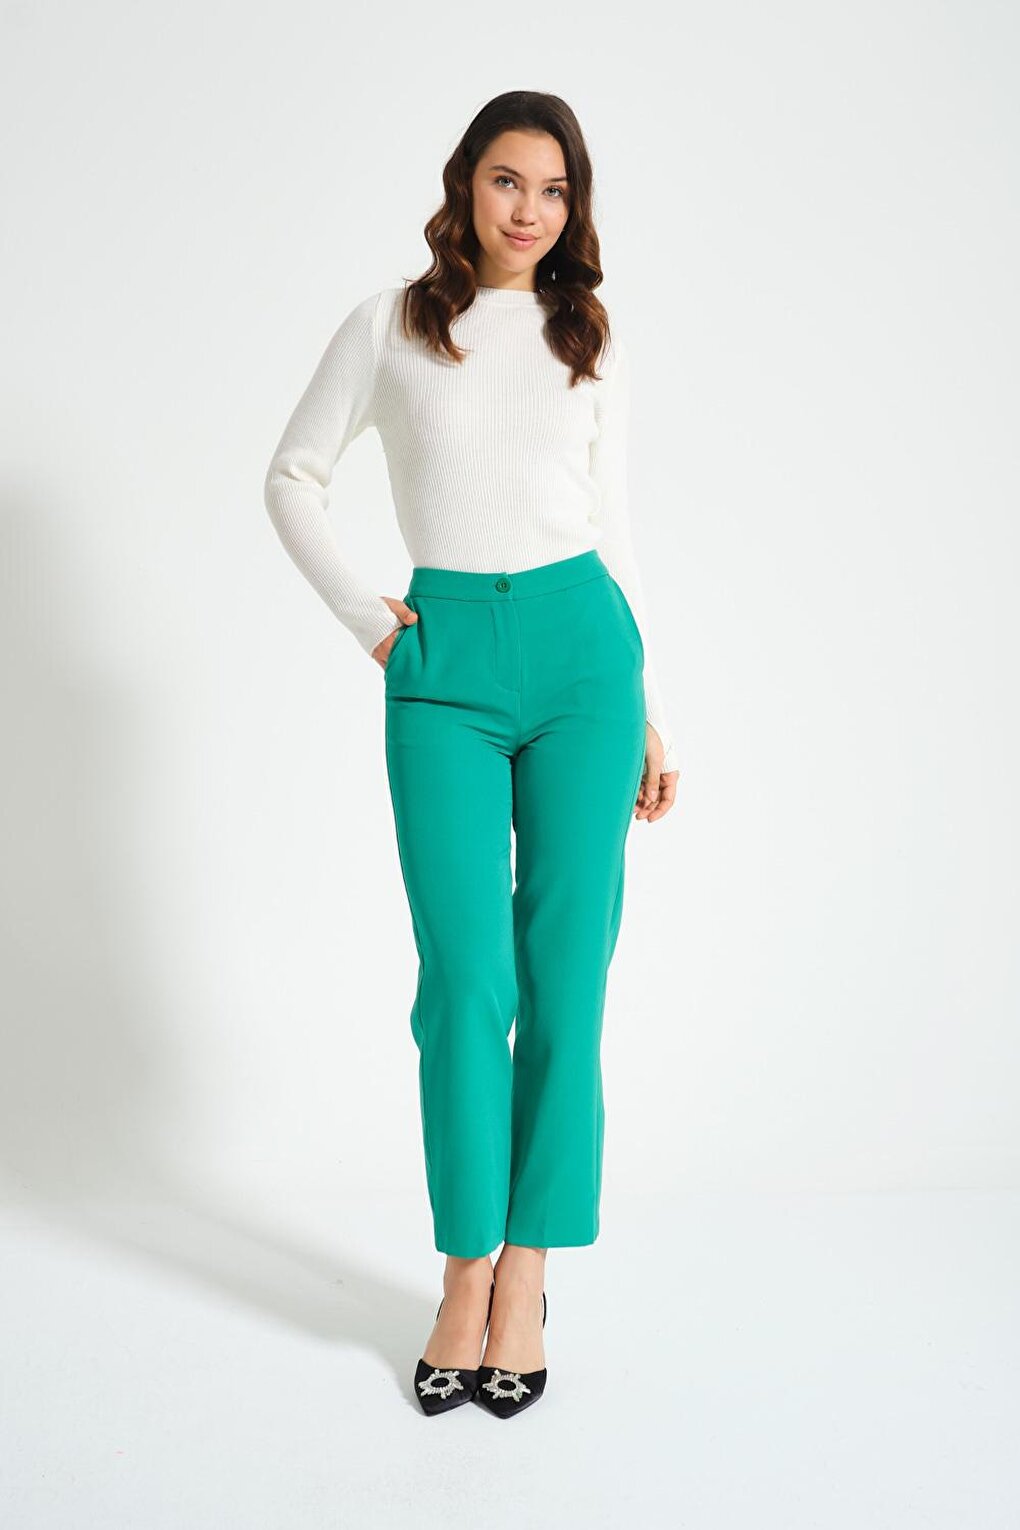 Двойные базовые зеленые брюки Mizalle брюки reserved базовые 42 размер